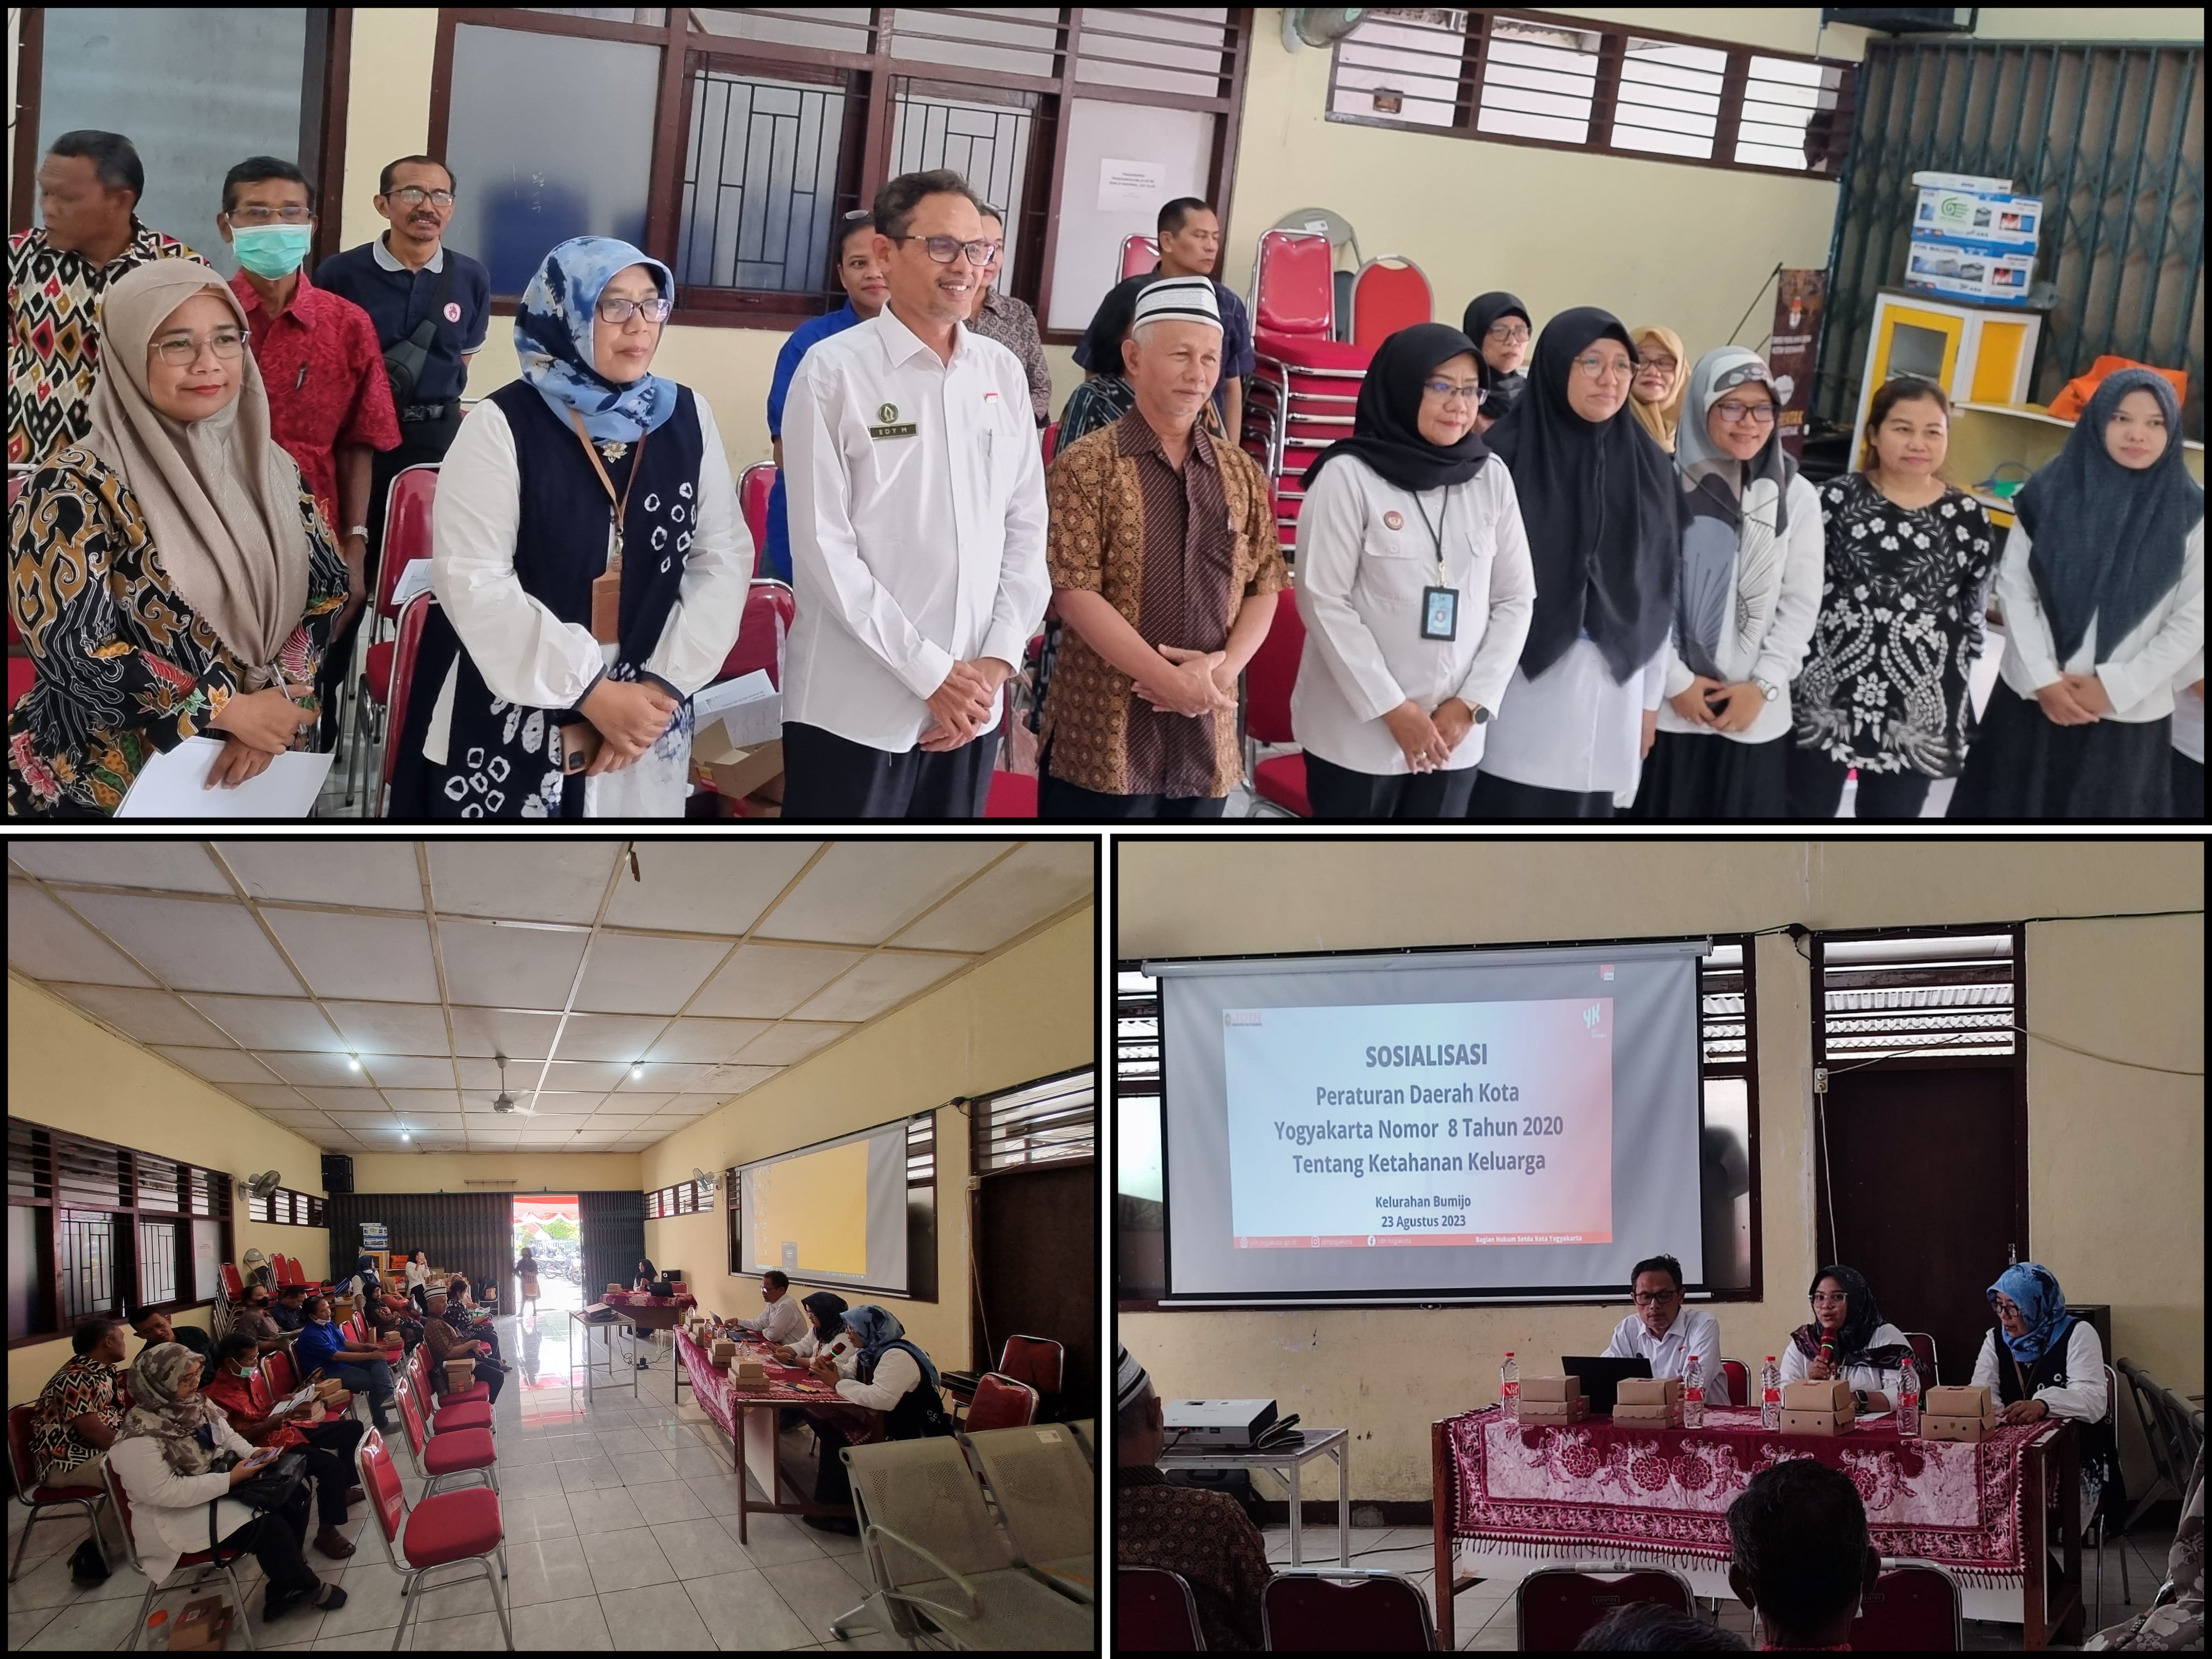 Sosialisasi Peraturan Daerah Kota Yogyakarta Nomor 8 Tahun 2020 tentang Pembangunan Ketahanan Keluarga di Kelurahan Bumijo